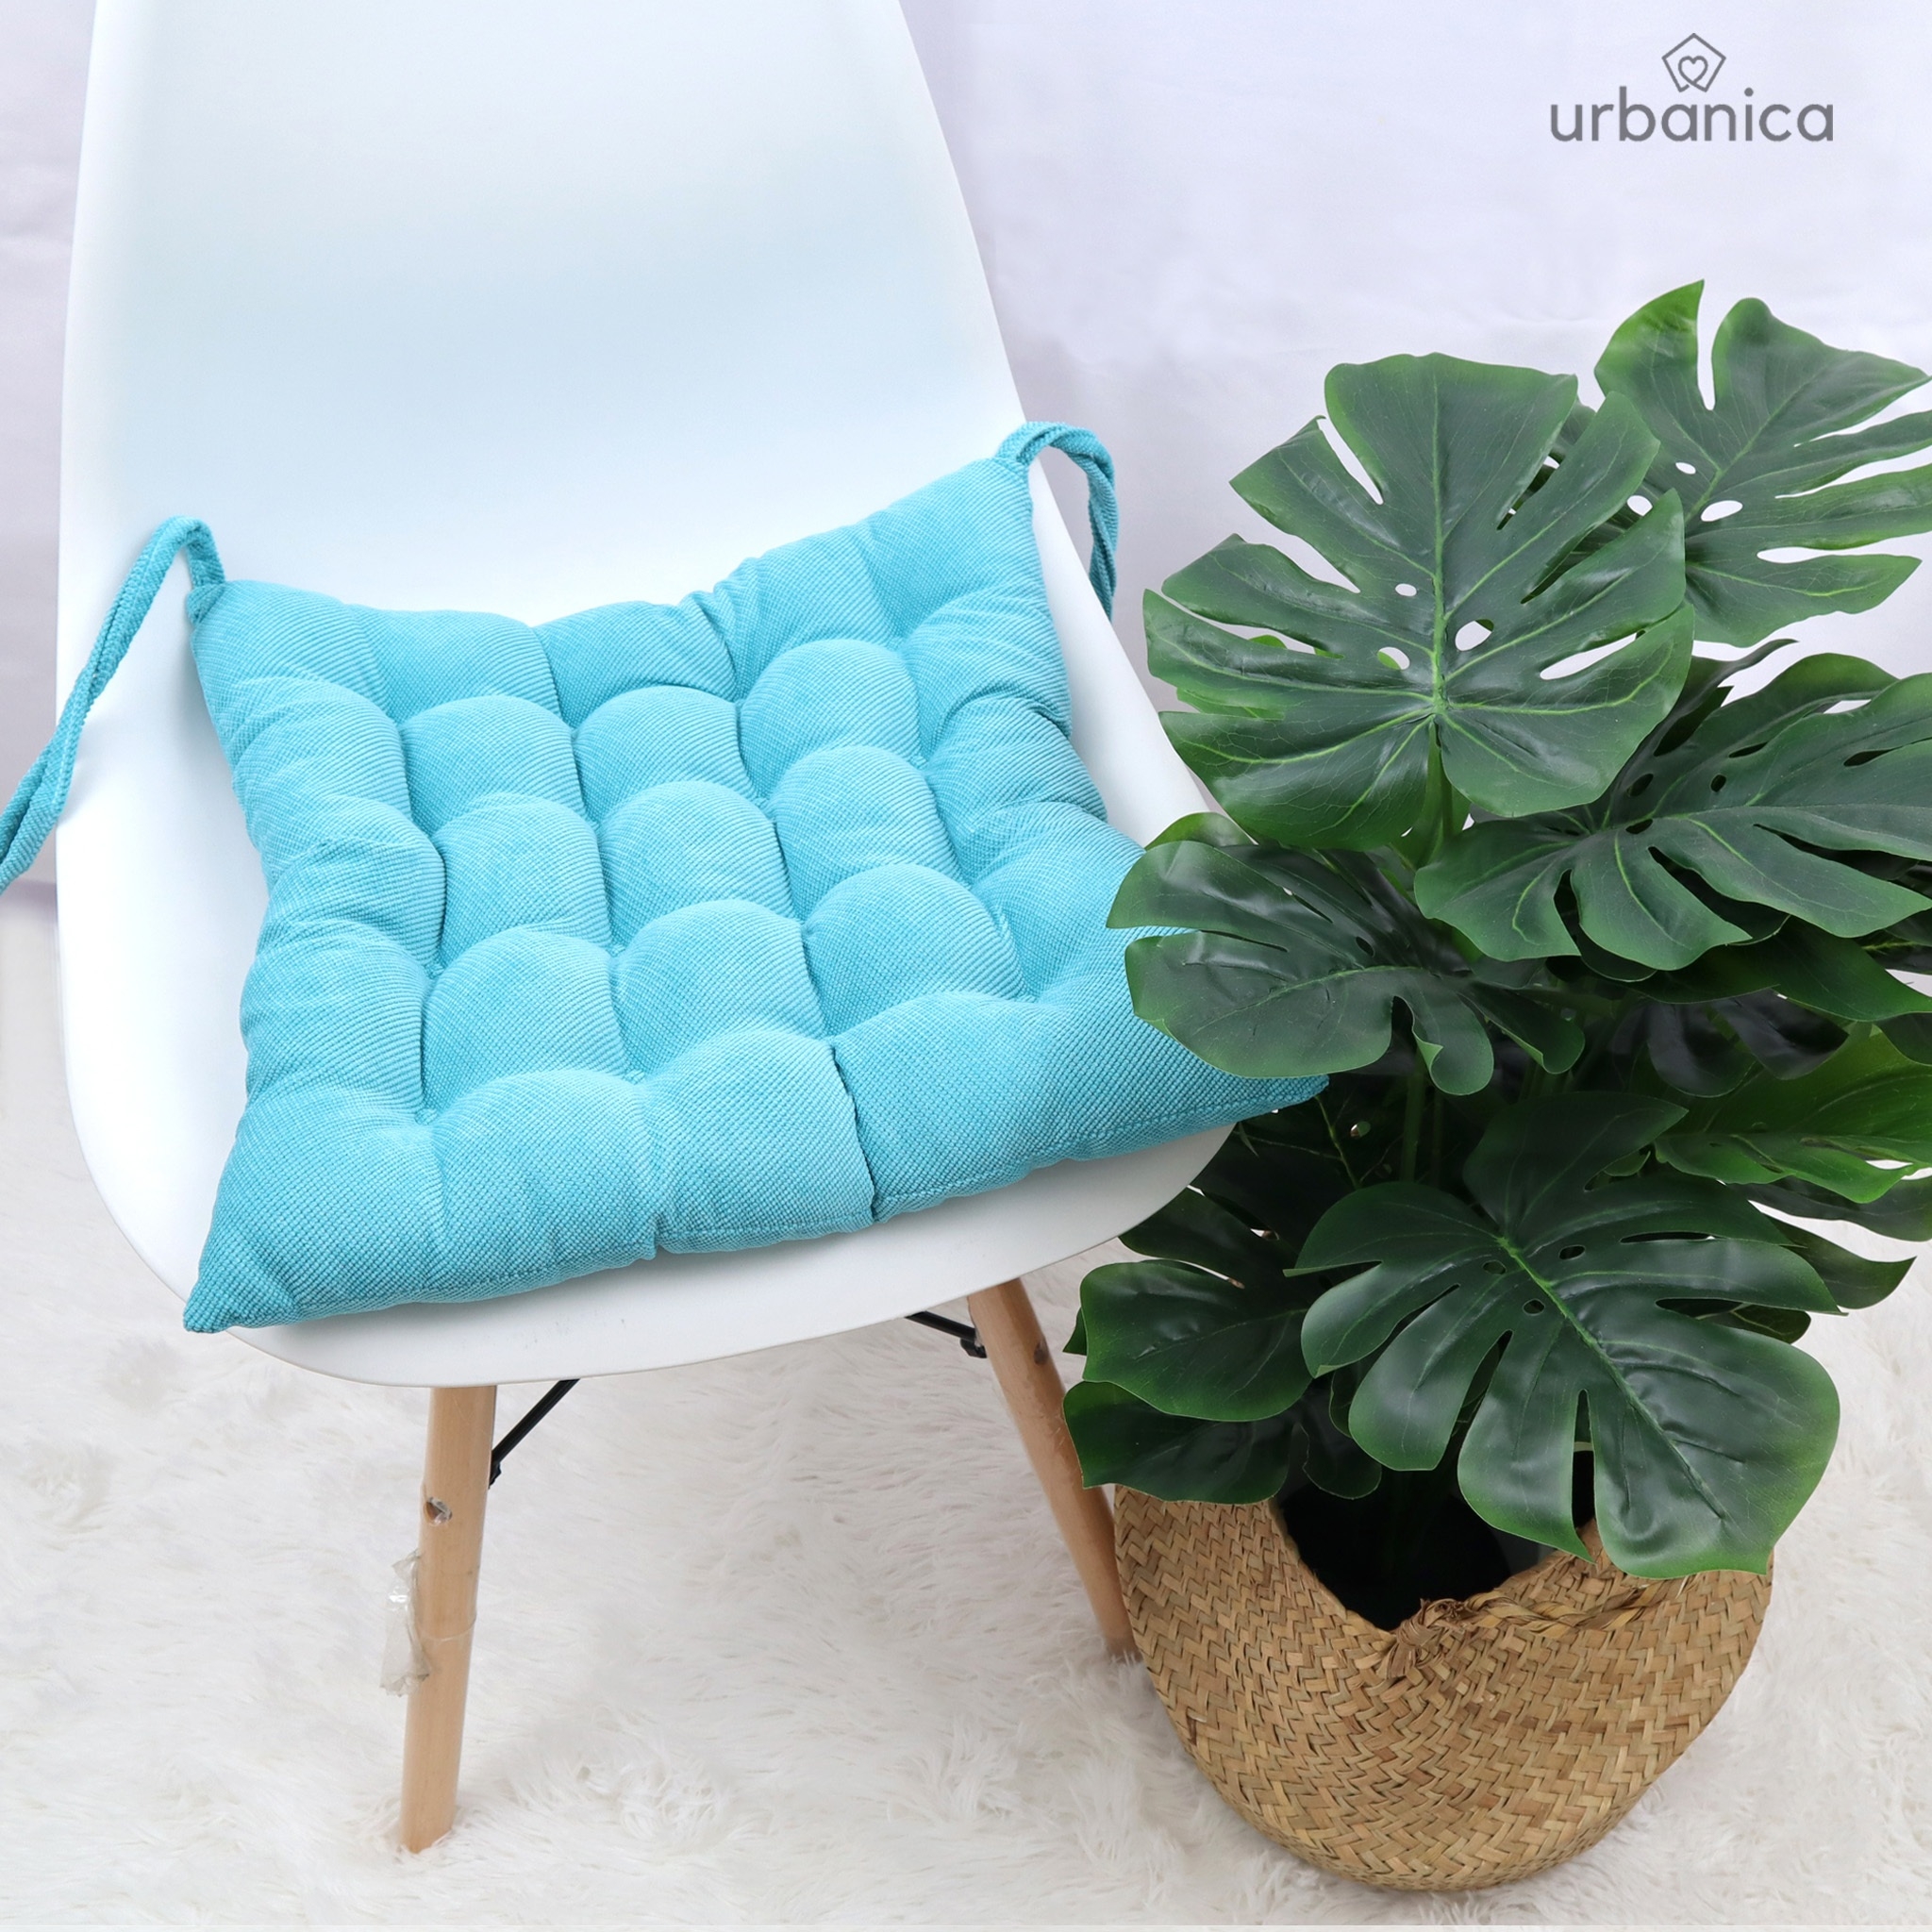 Urbanica เบาะรองนั่ง Nordic style size 40x40 cm  variation3 Green